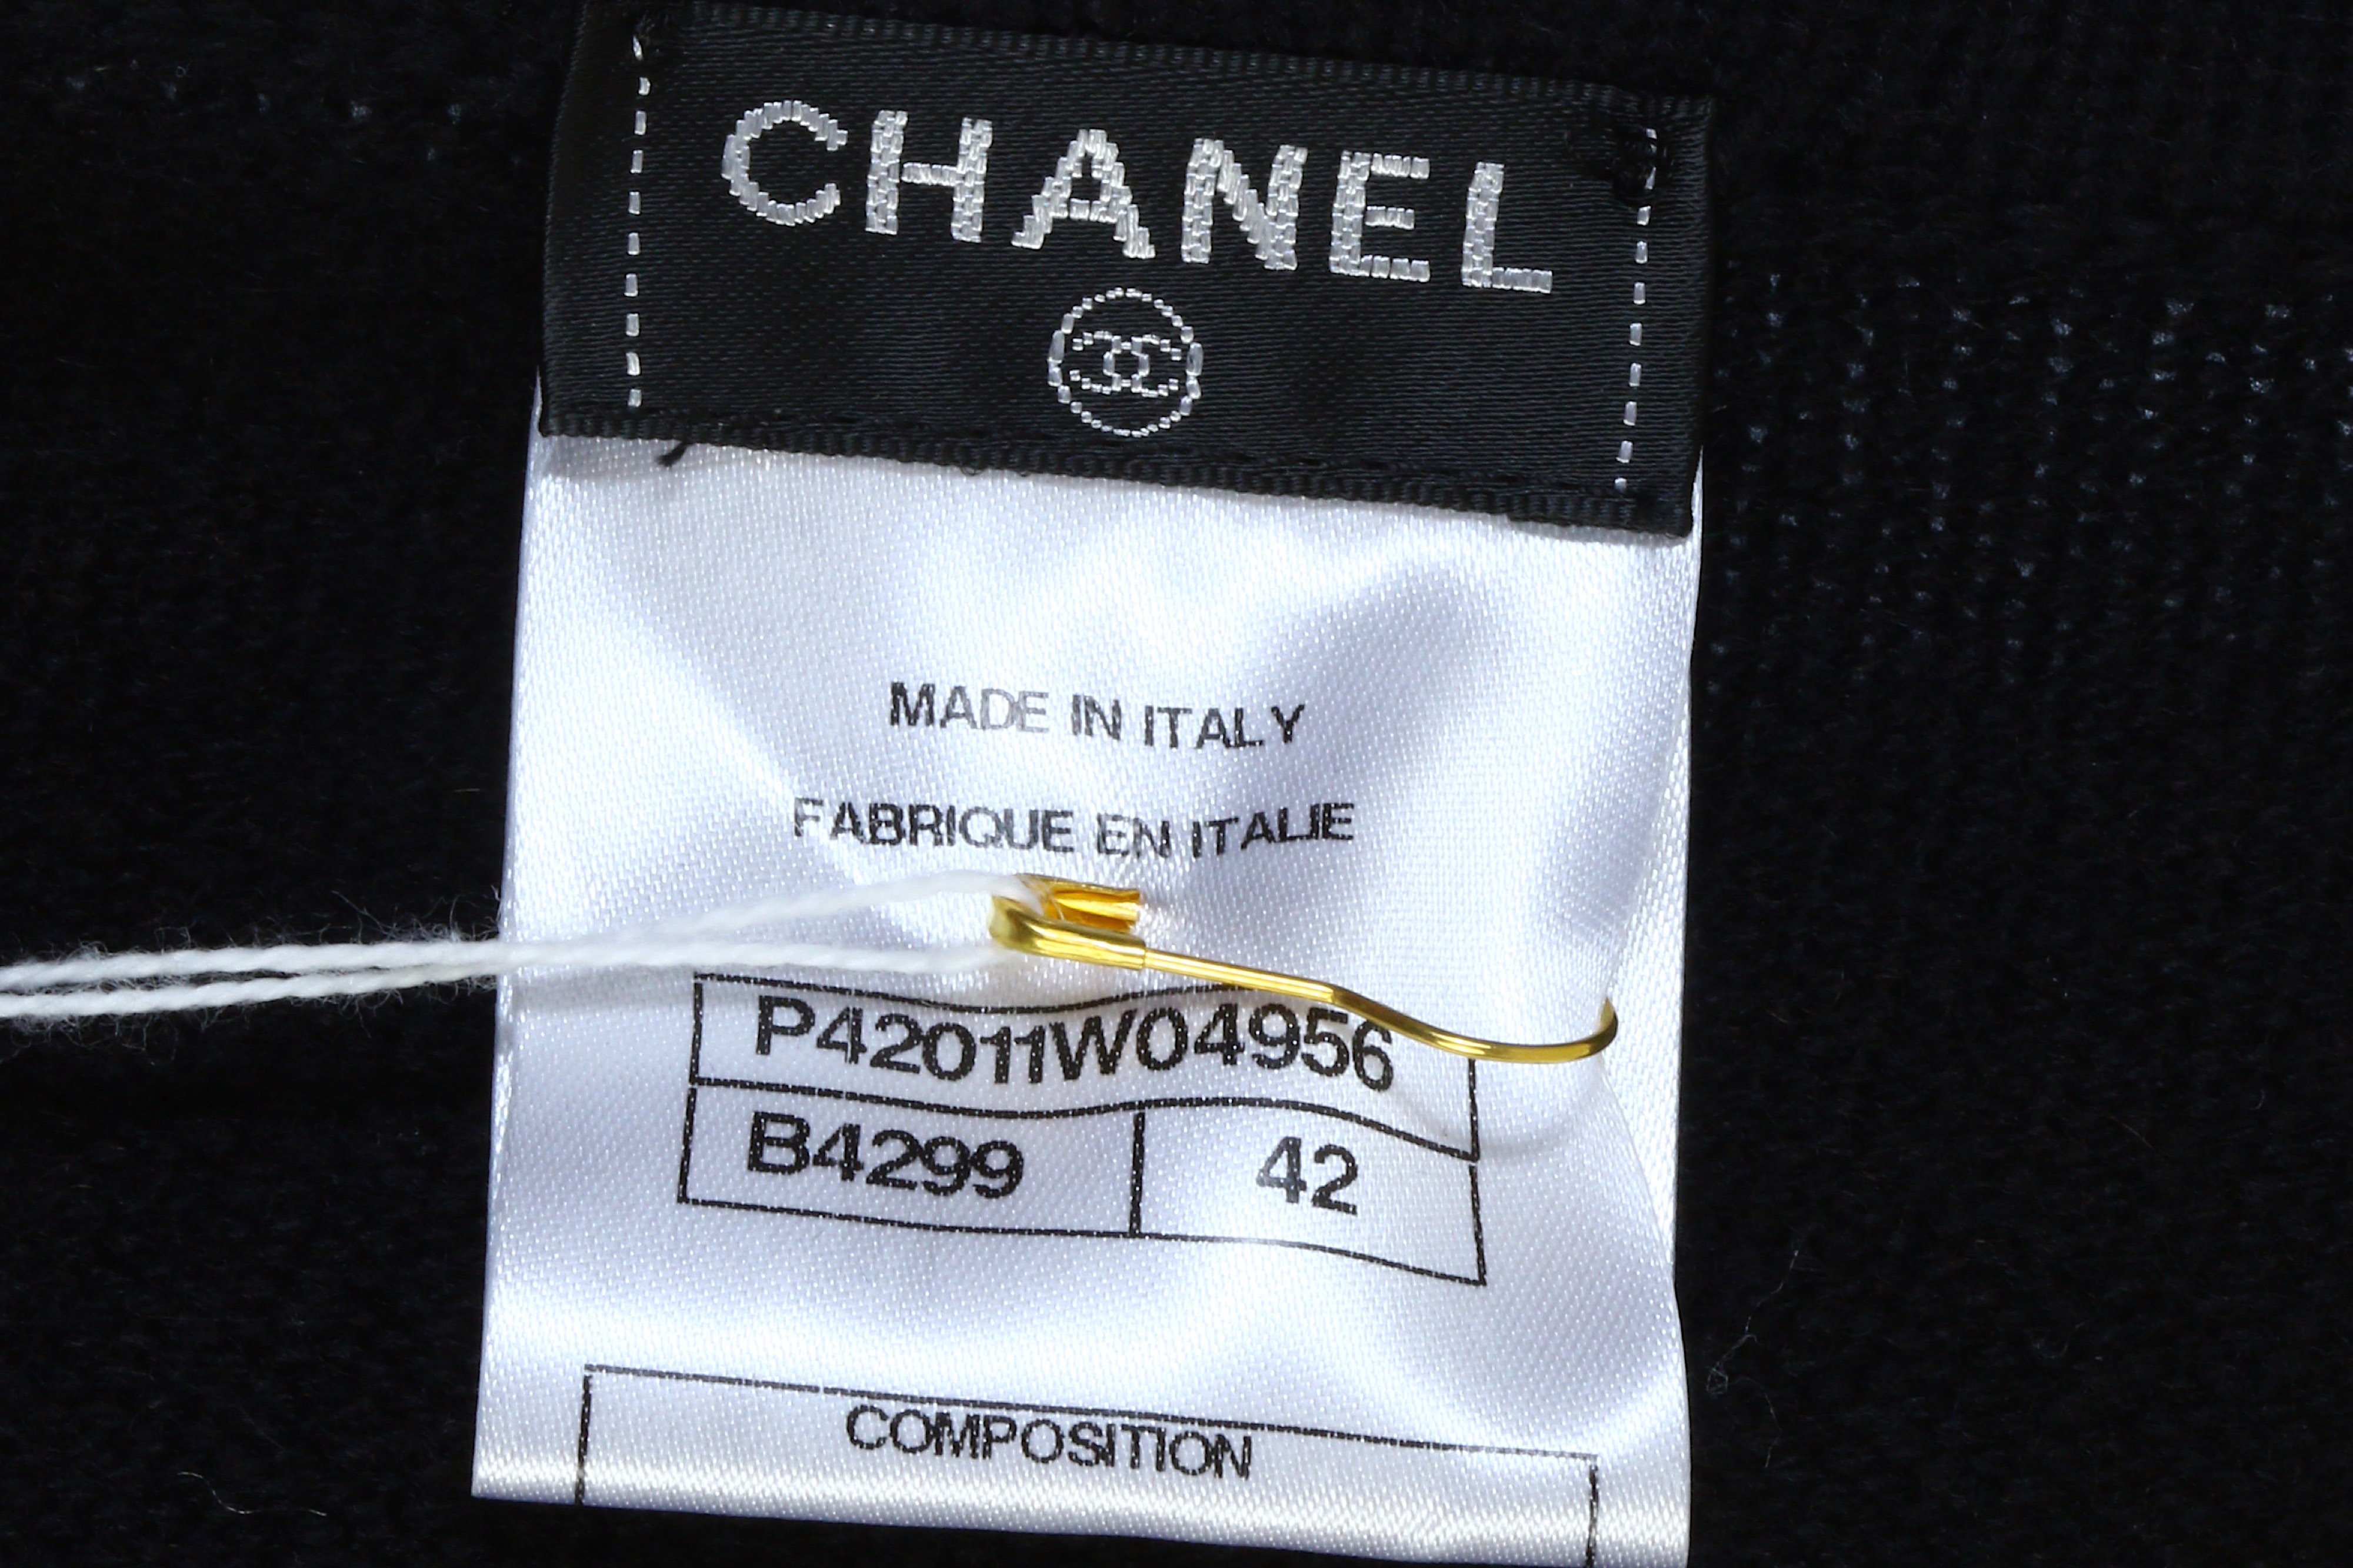 Chanel Black Cashmere Cardigan - Image 6 of 7